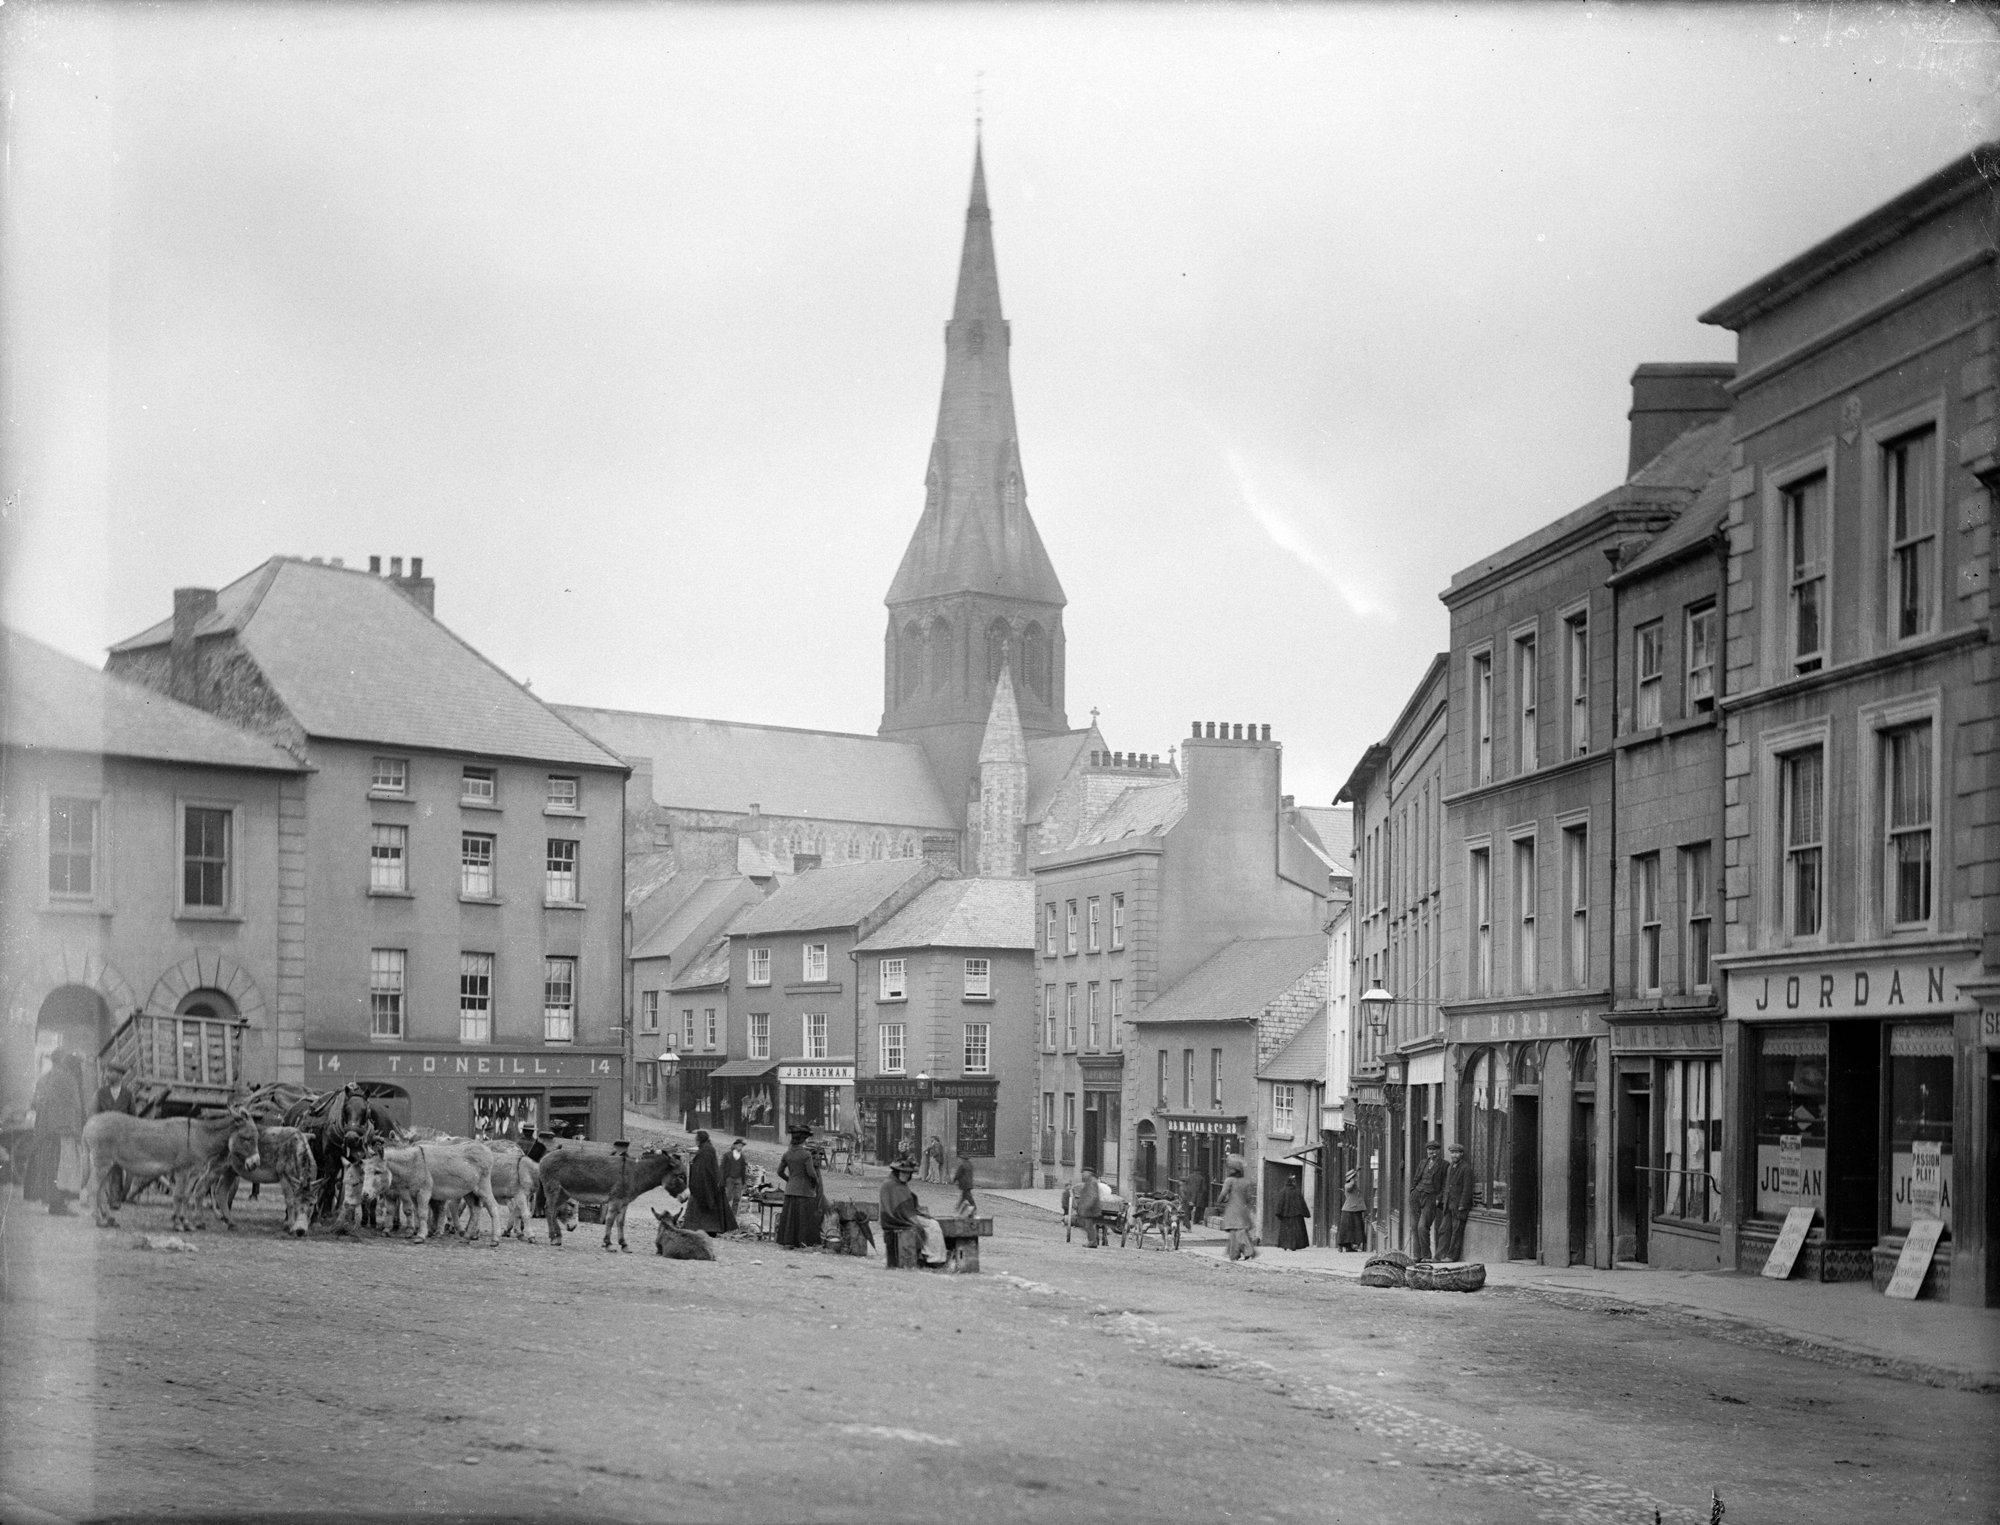  Old photo of Market Square, Wexford, Ireland